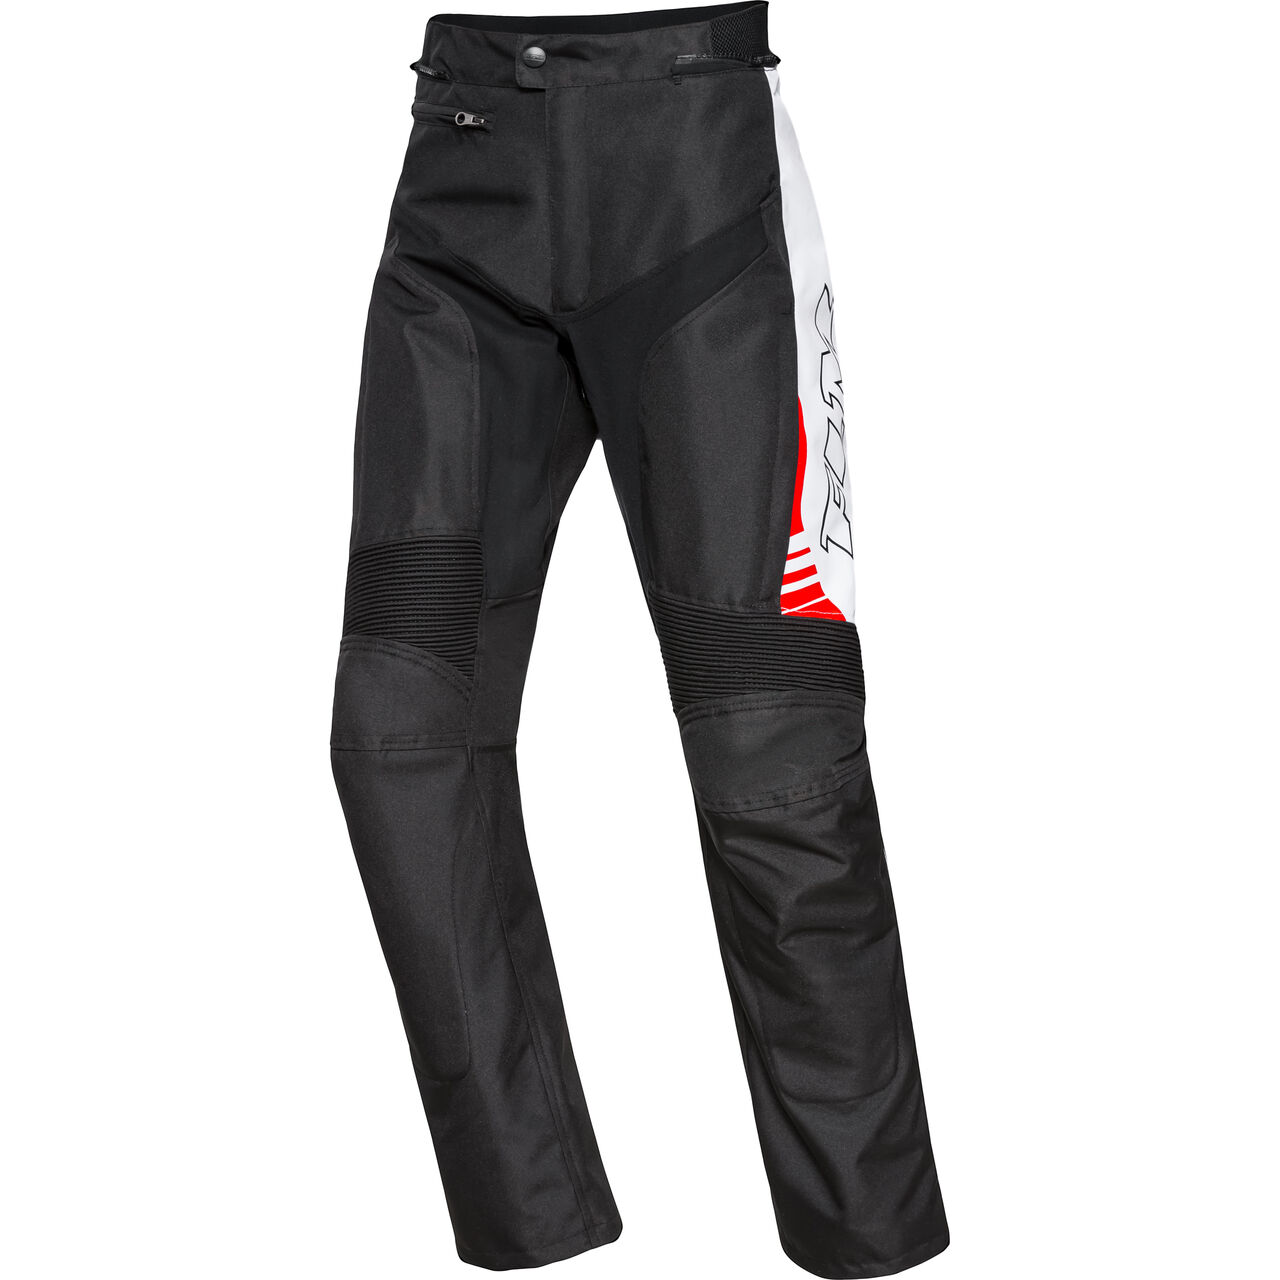 Traction Ladies textile pants black/white S